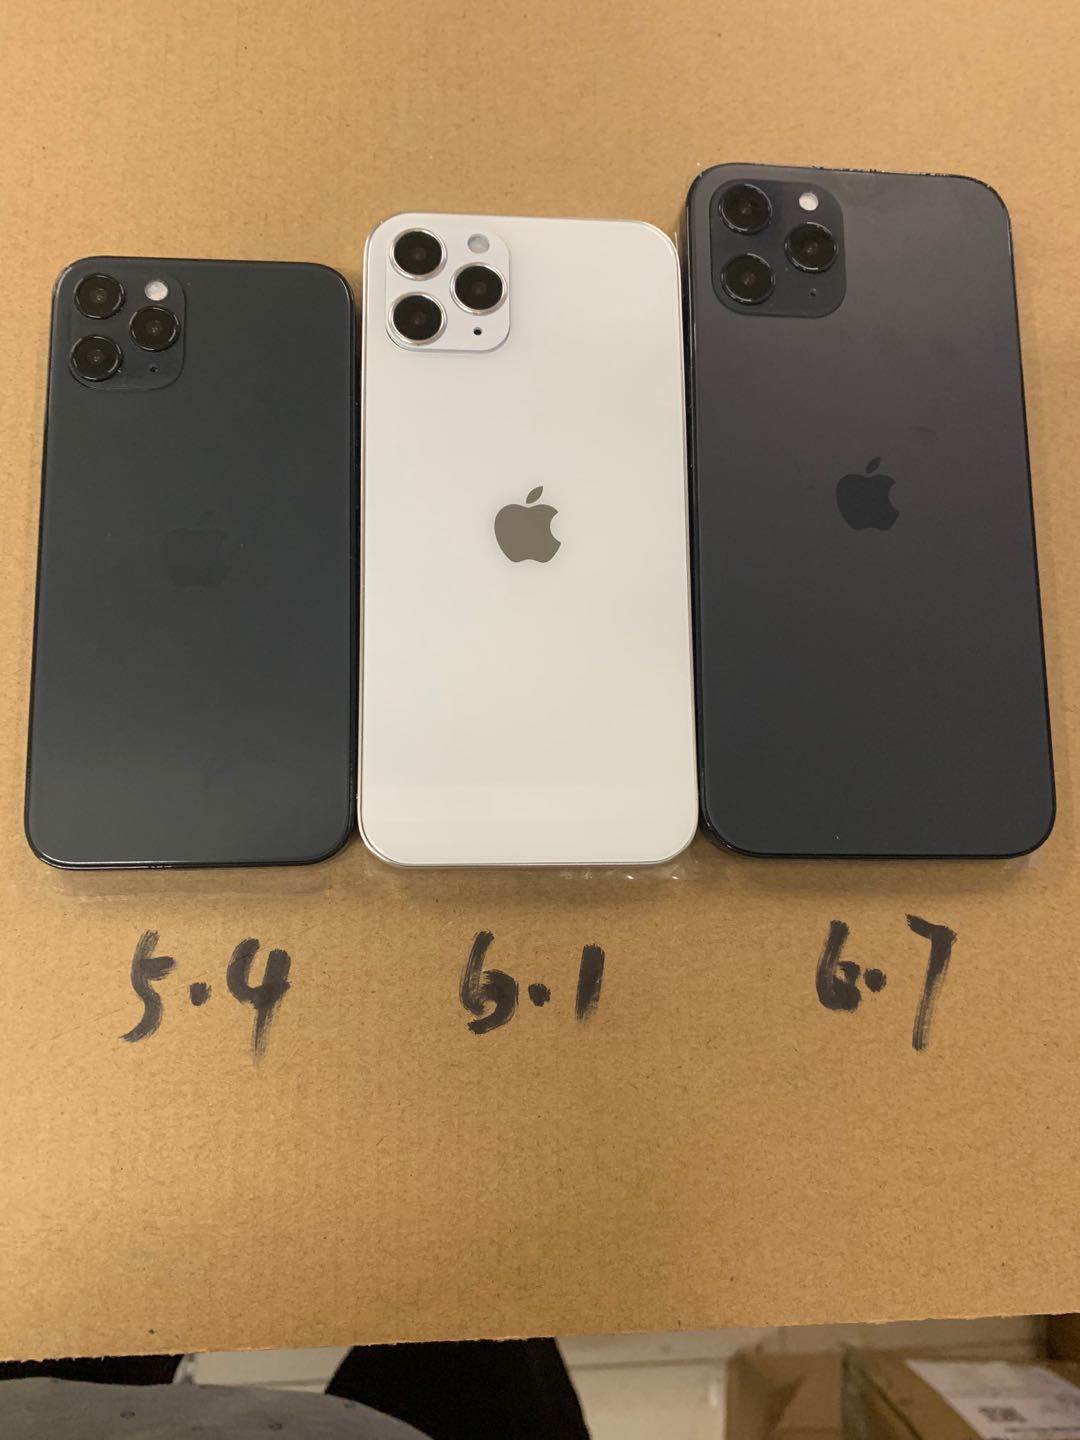 iPhone13 未采用 5G 技术，苹果的决策背后涉及诸多因素  第8张